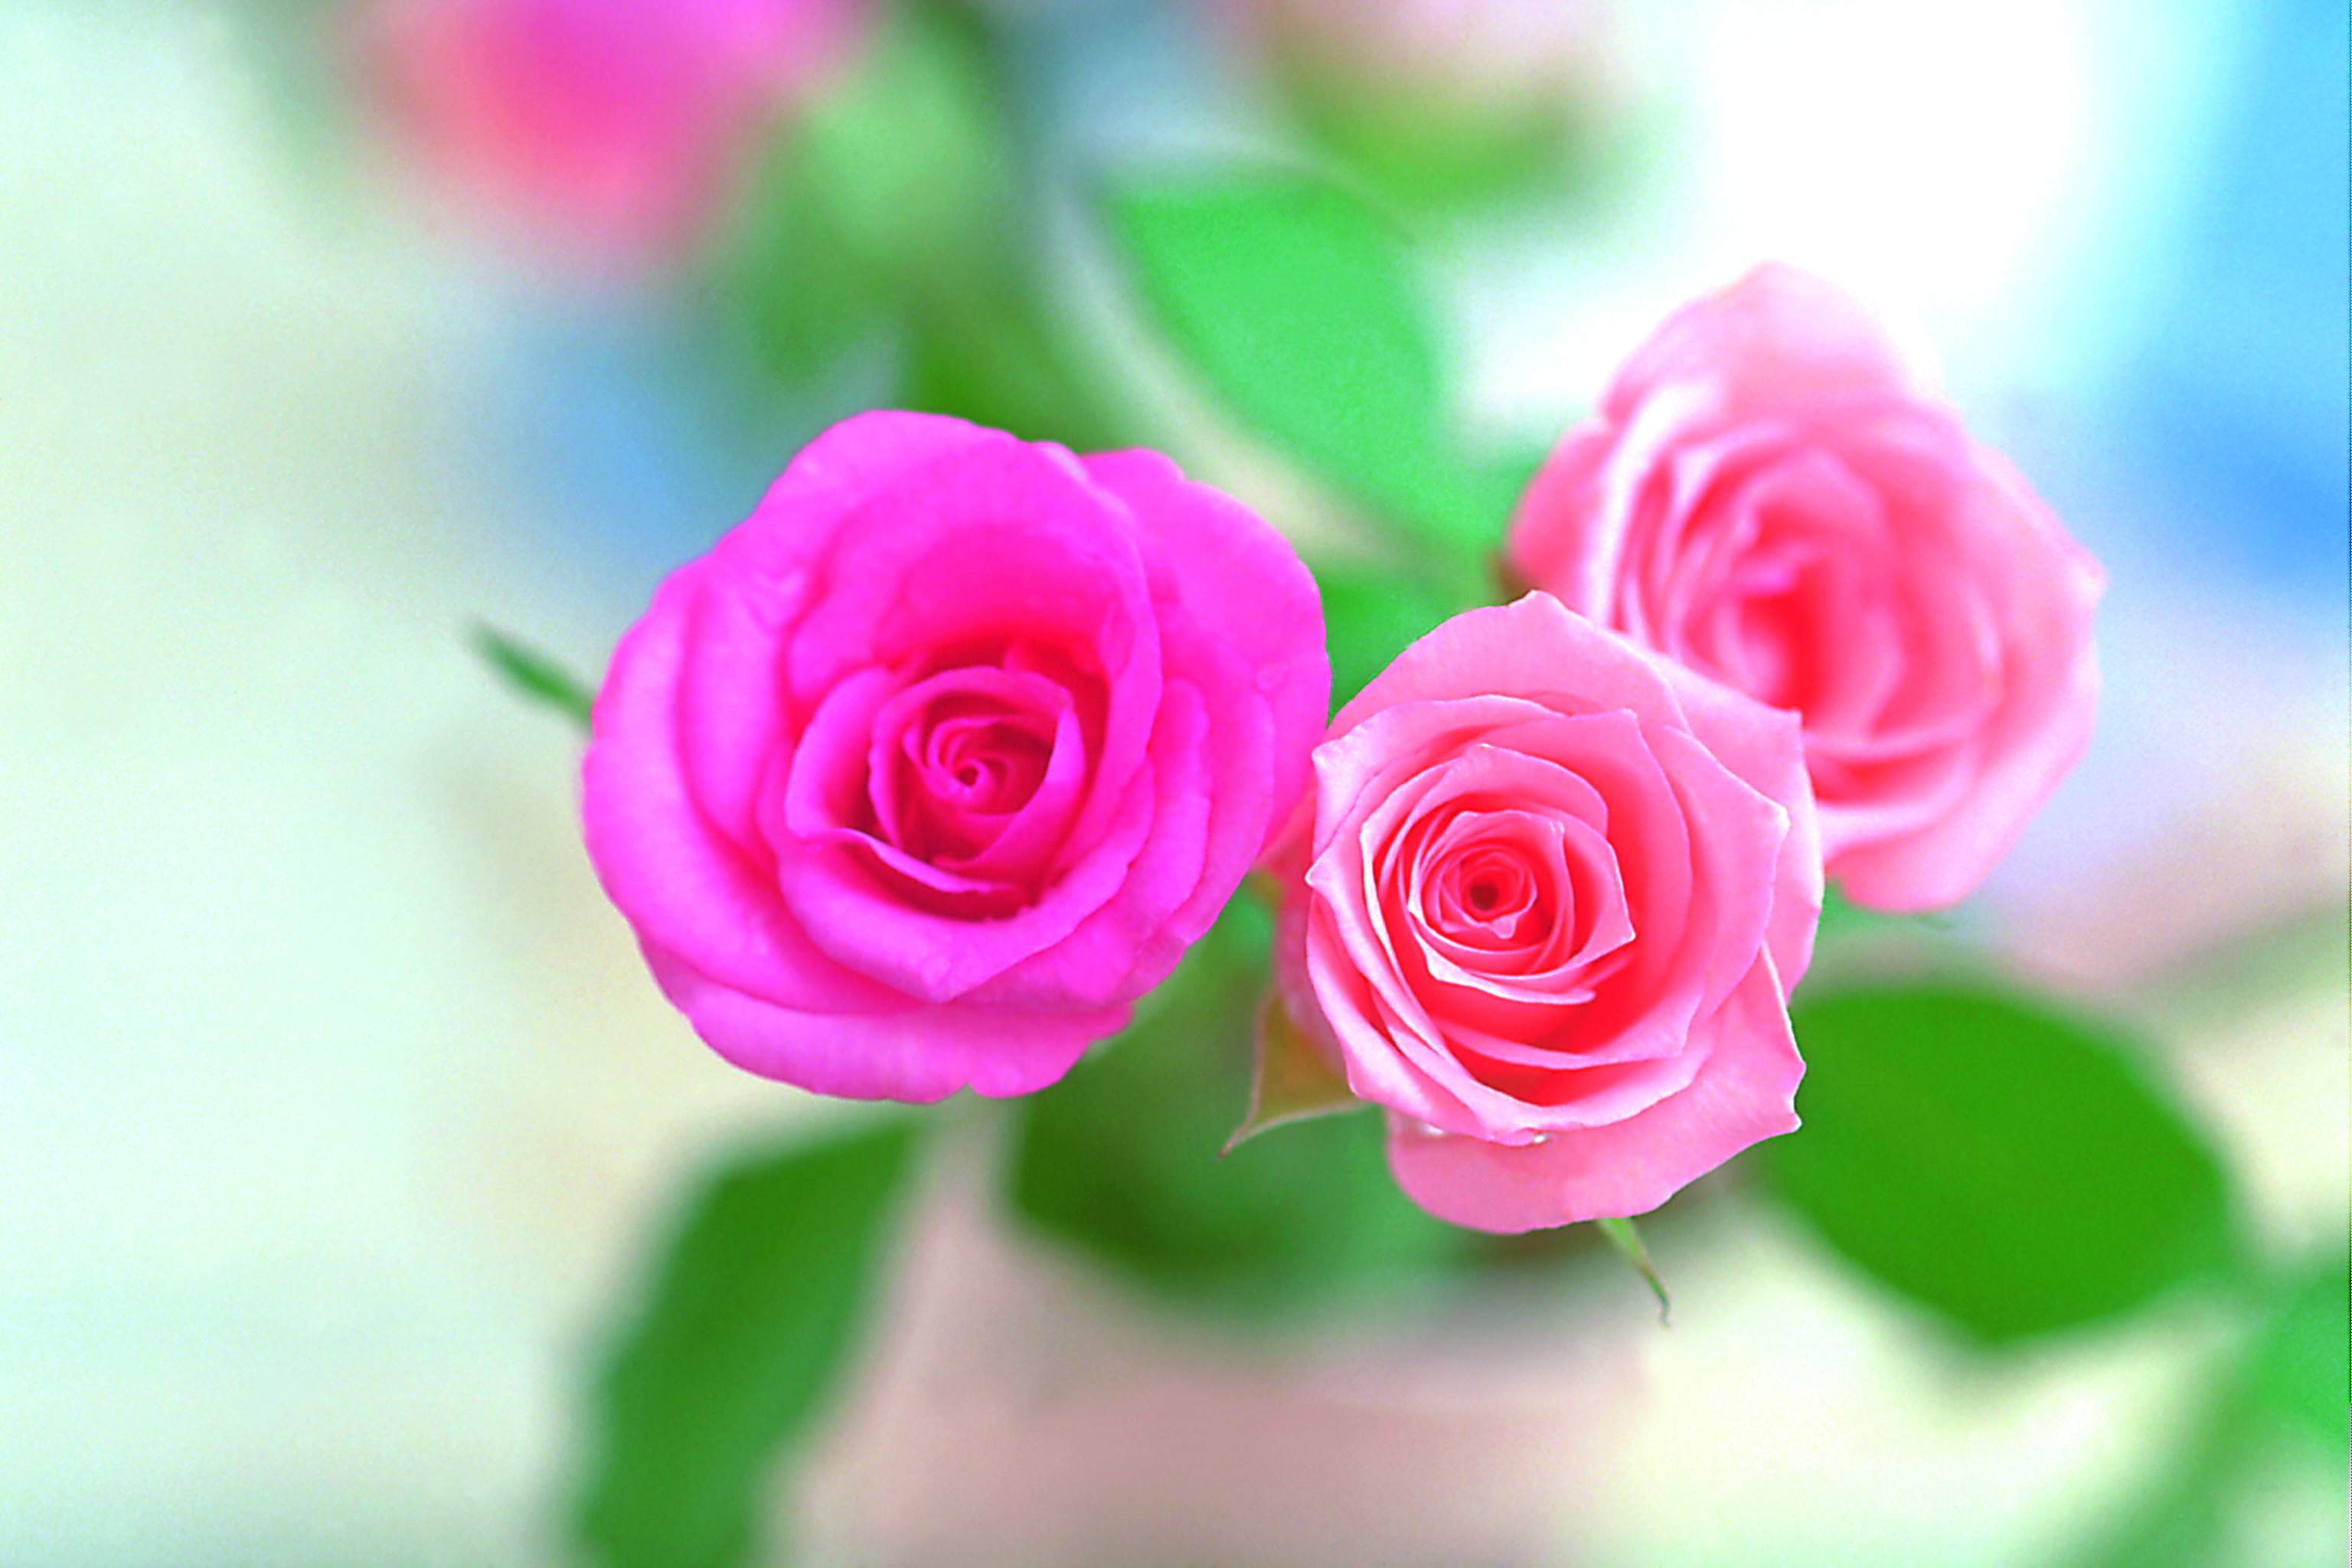 rose wallpaper hd,fiore,pianta fiorita,rose da giardino,rosa,rosa